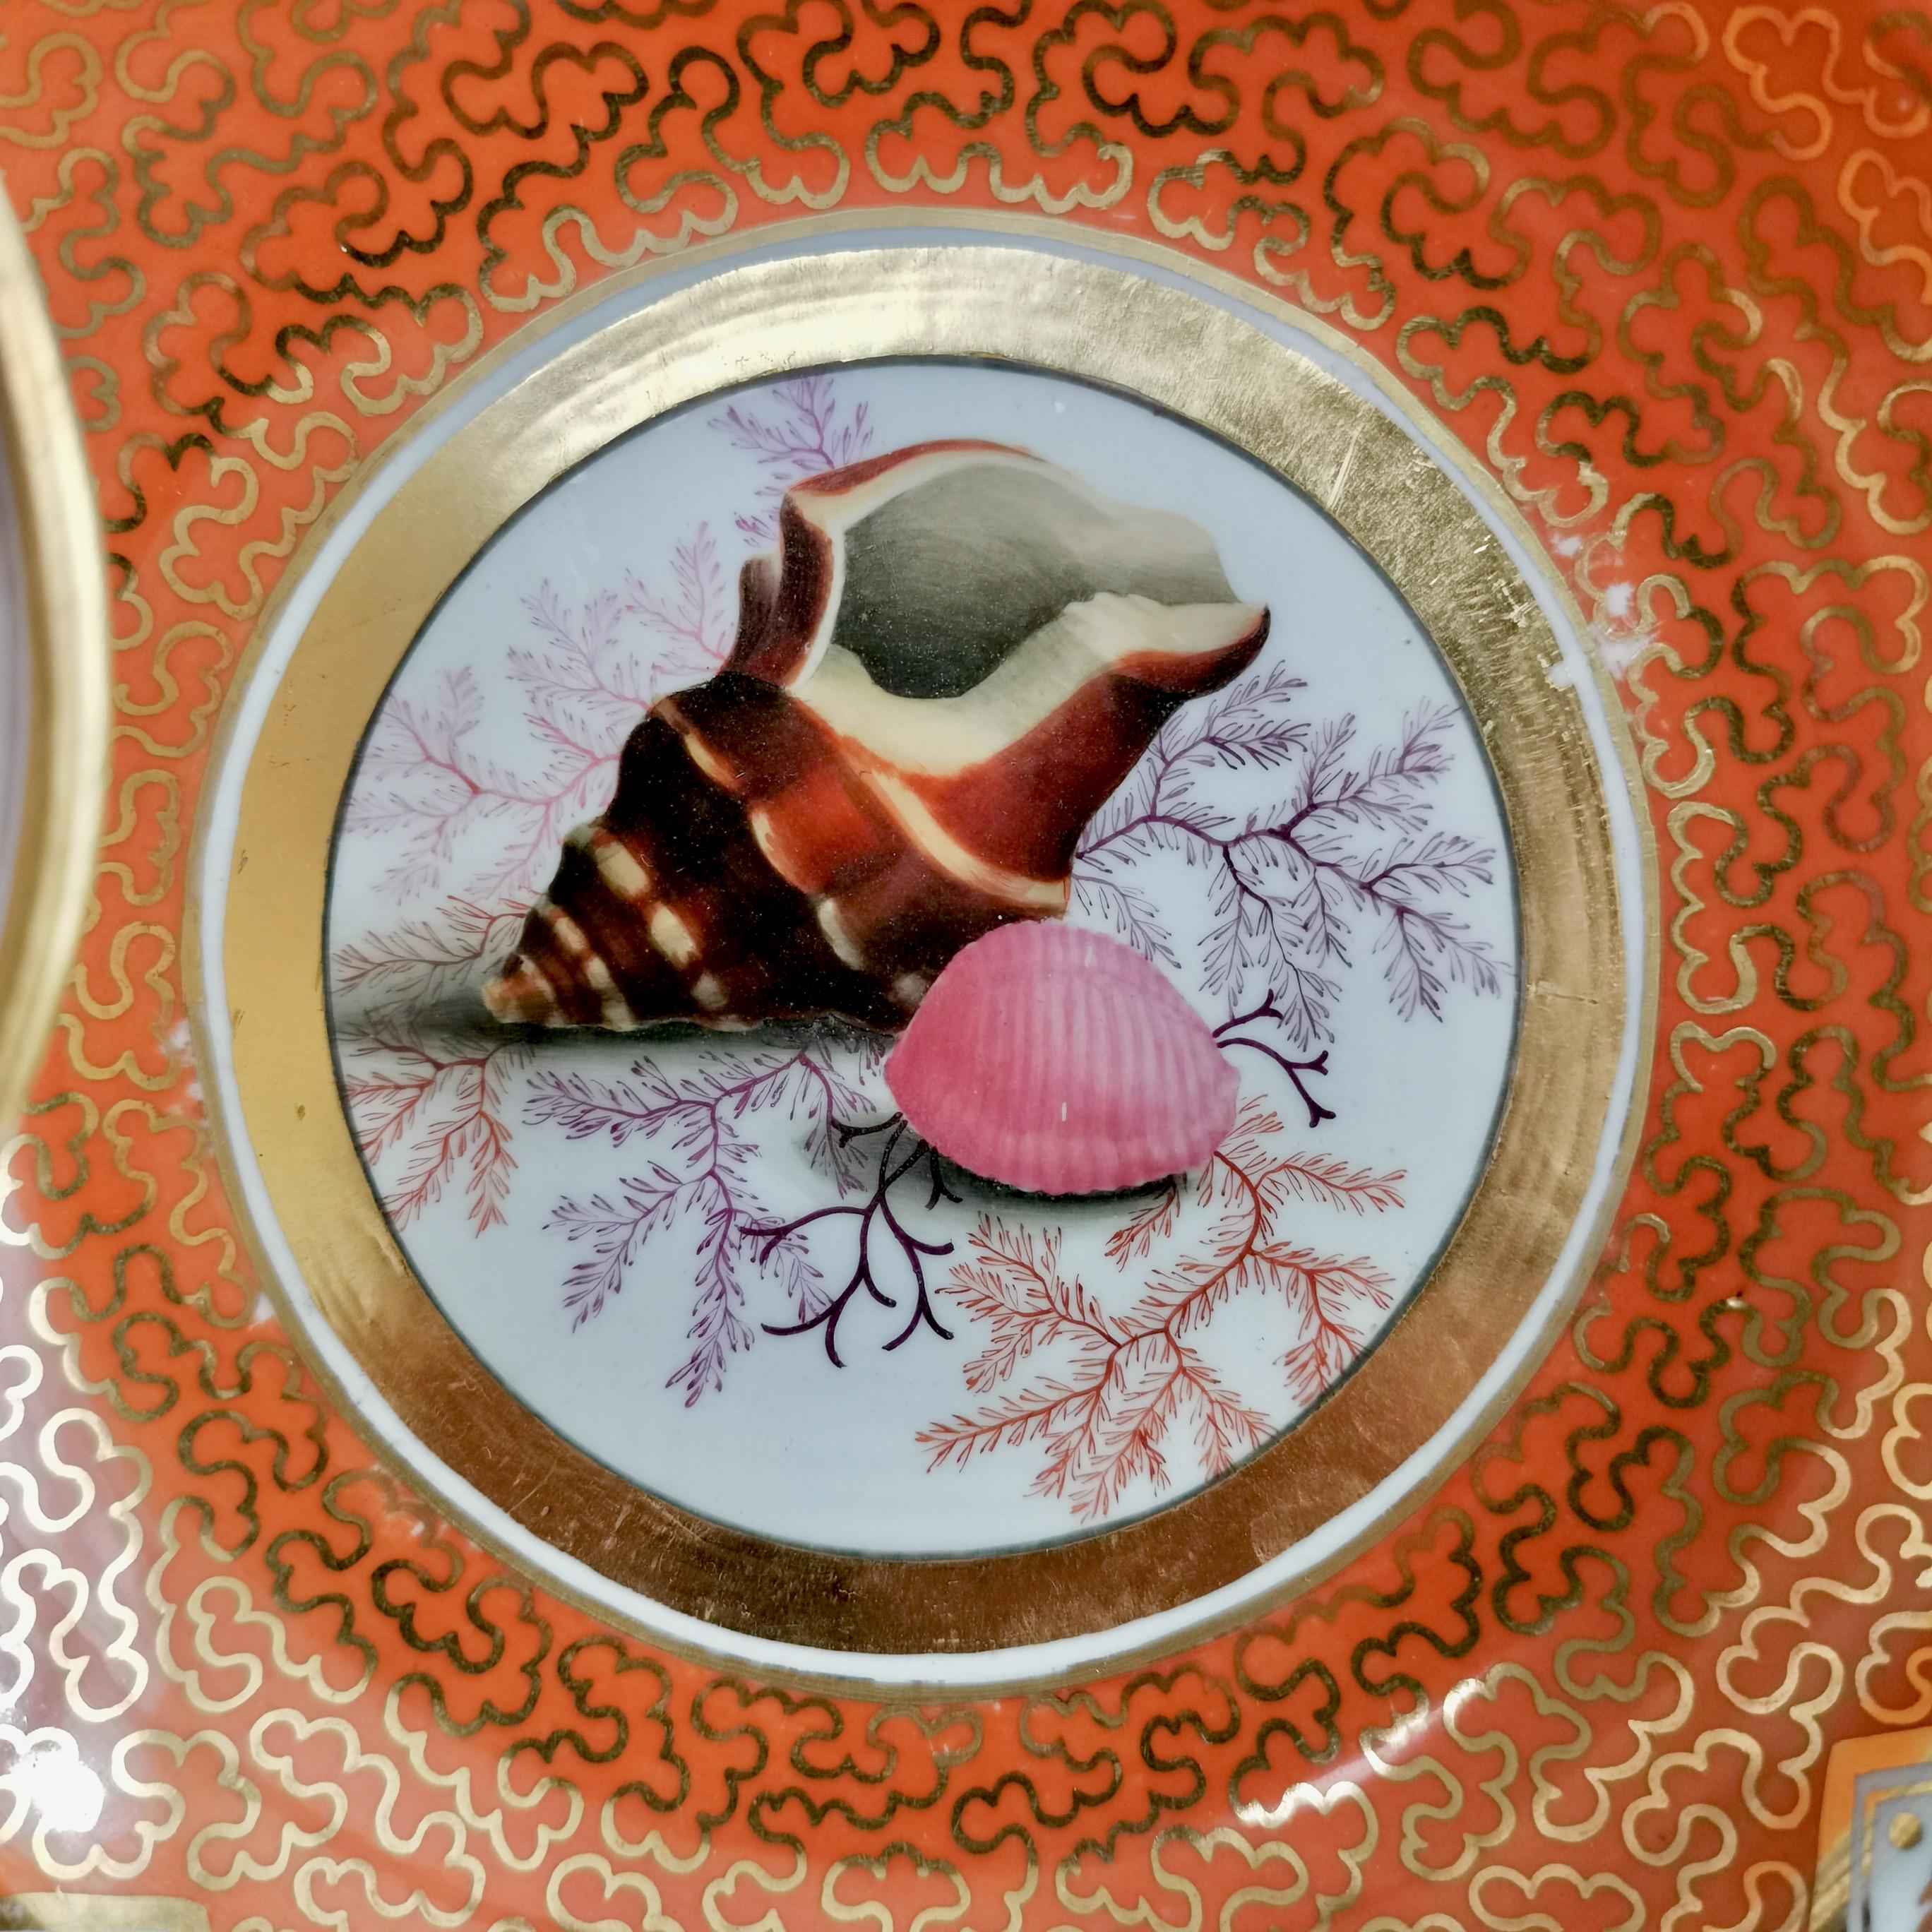 Chamberlains Worcester Porcelain Dessert Service, Orange, Regency, circa 1815 10